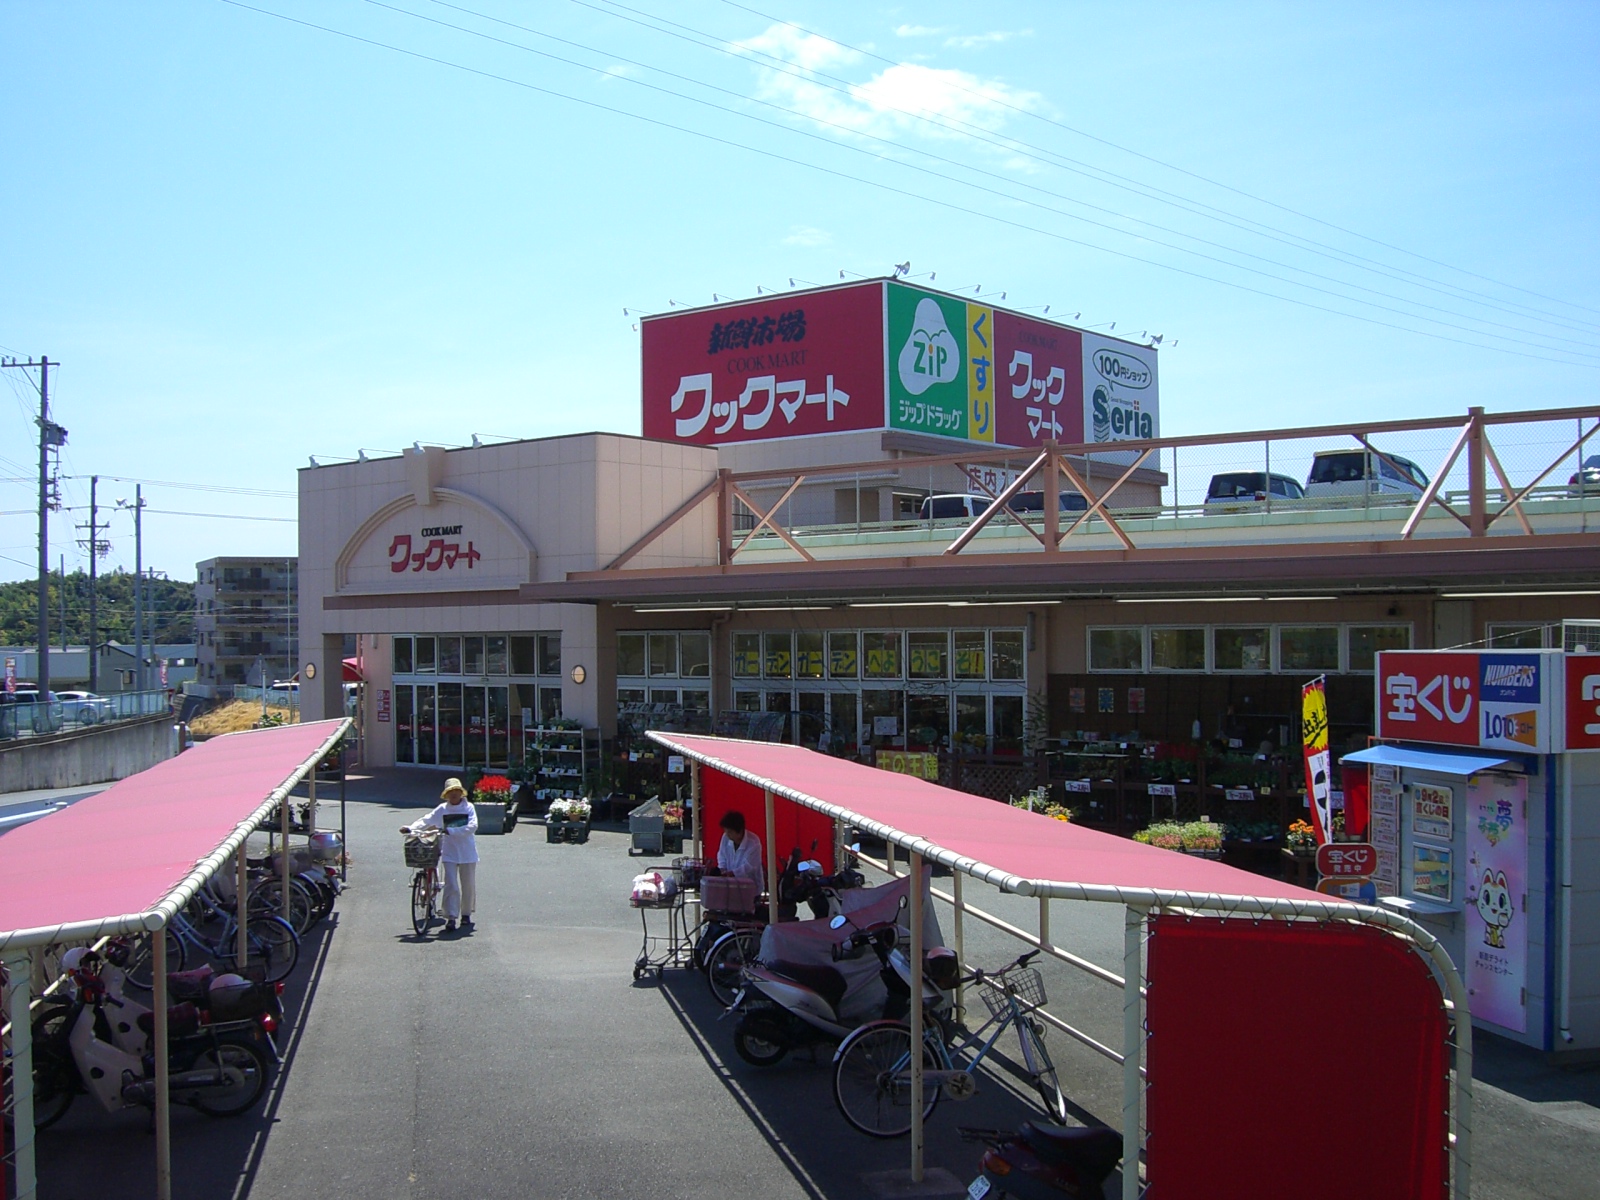 Shopping centre. 558m to Cook Mart Lake Hamana Nishiten (shopping center)